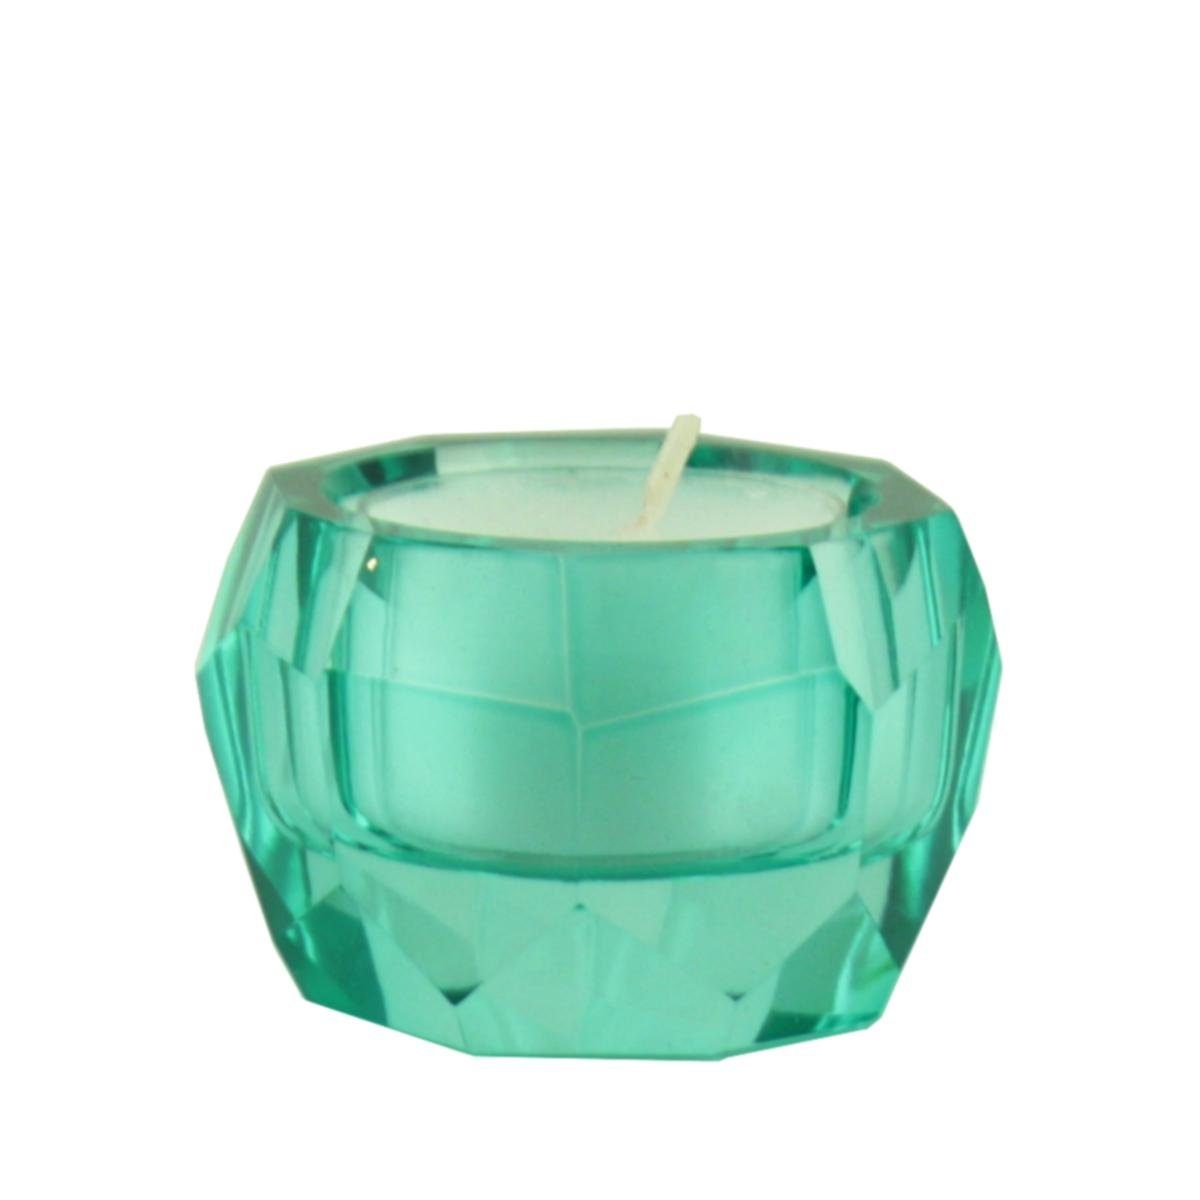 Giftcompany Teelichthalter Gift-Company Teelichthalter Kristallglas lichtgrün ca 4 cm H (Stück)